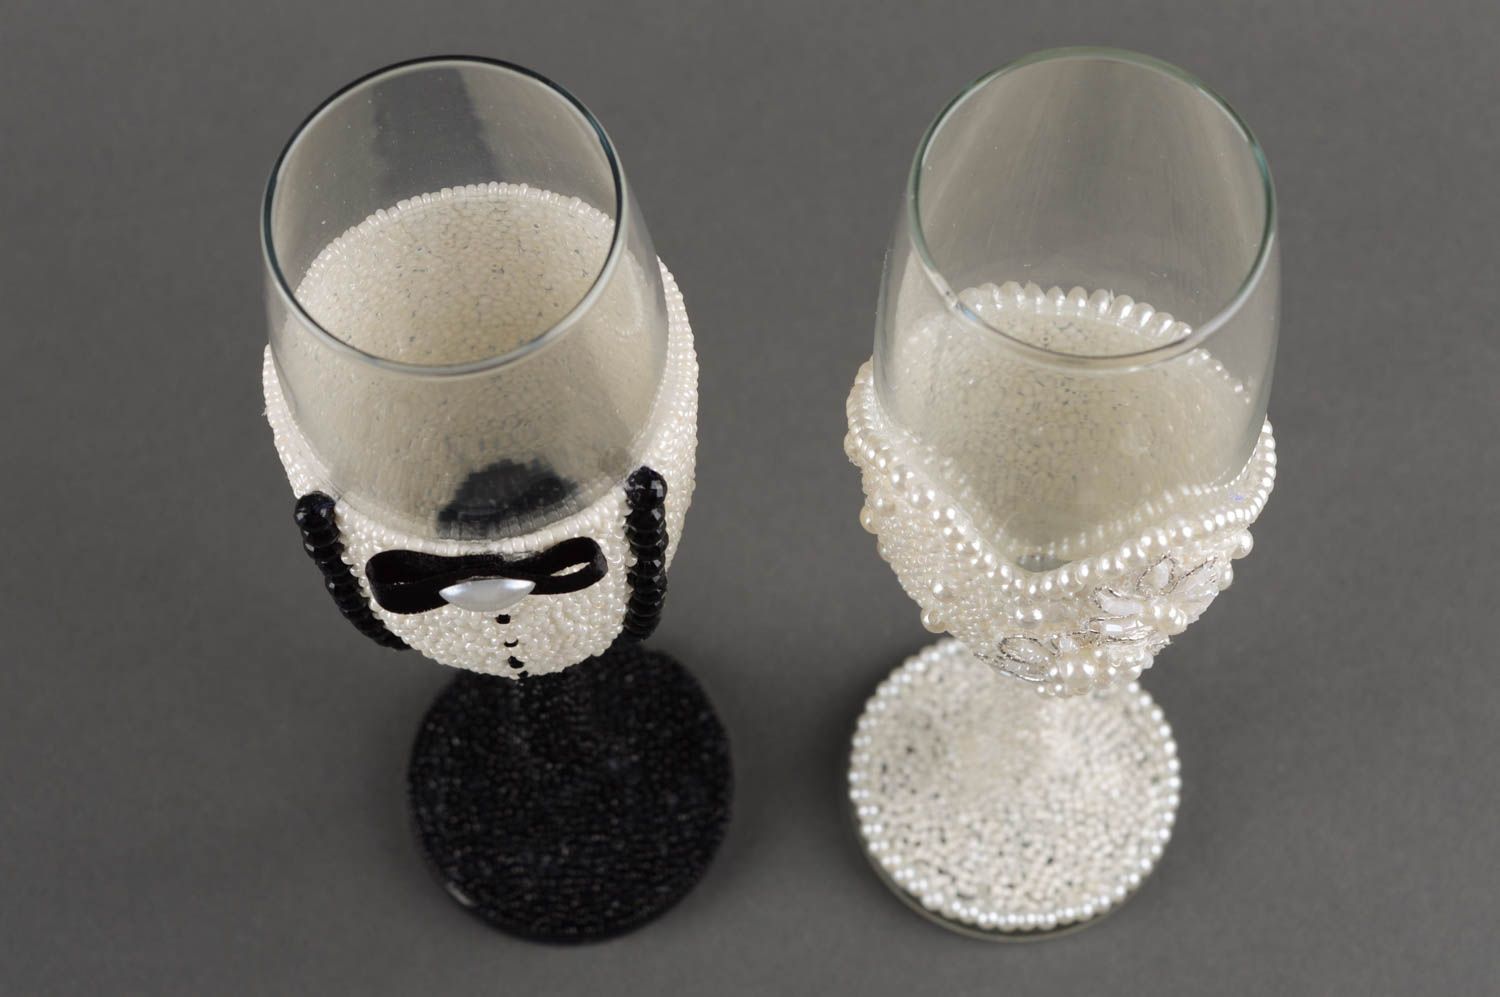 Handmade wedding glasses 2 pieces decorative glass ware wine glass gift ideas photo 5